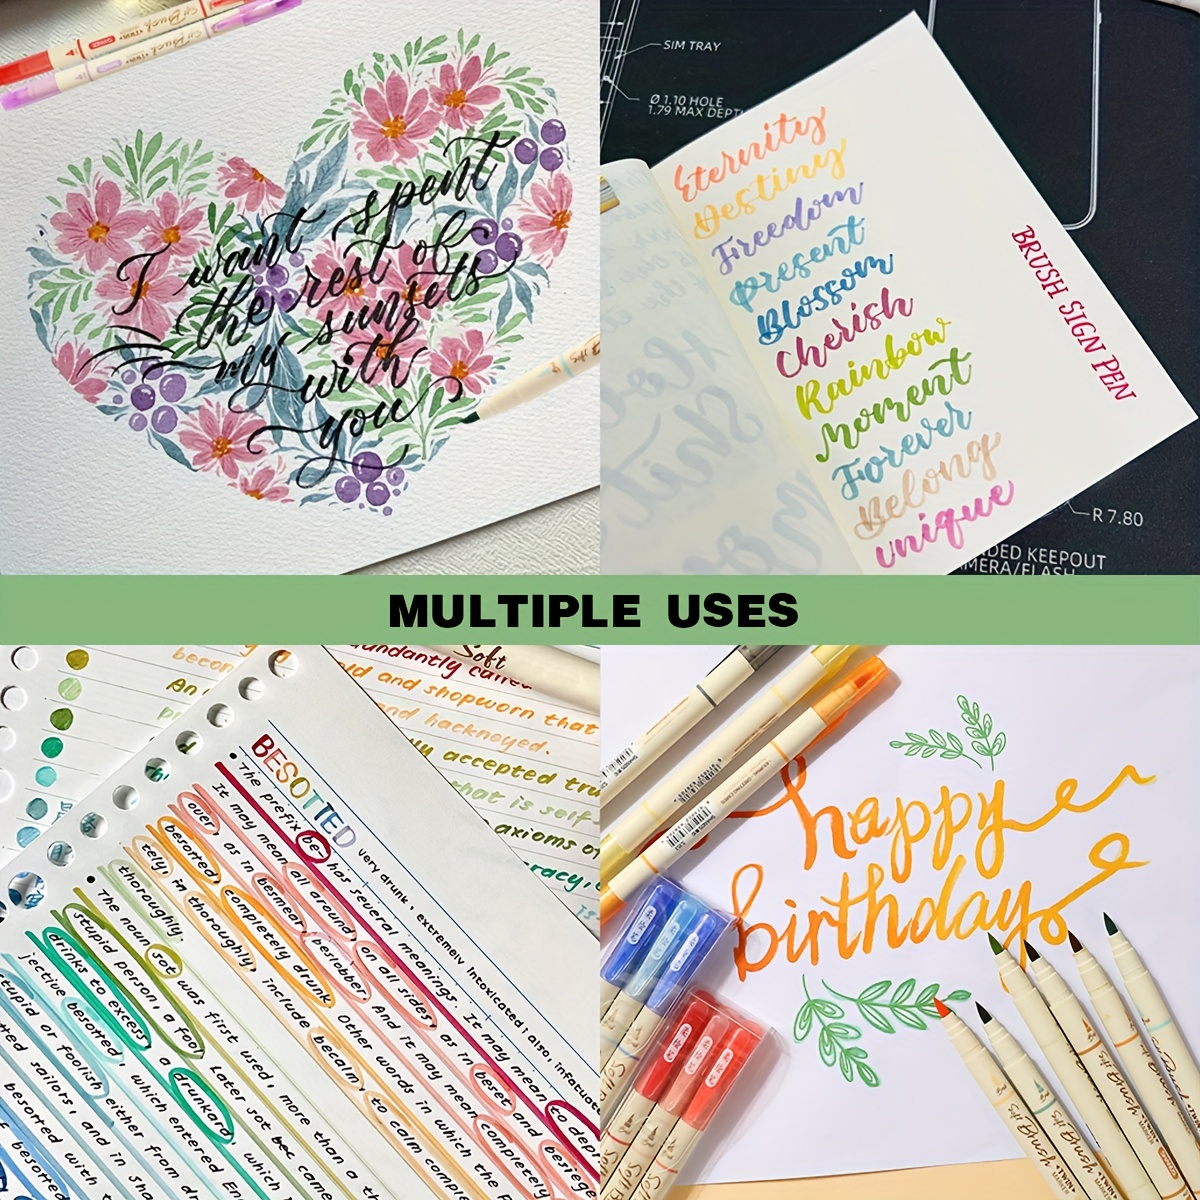 Art Marker Pen, Drawing Pen, 18 Colors Elastic Fine Tip Brush Note